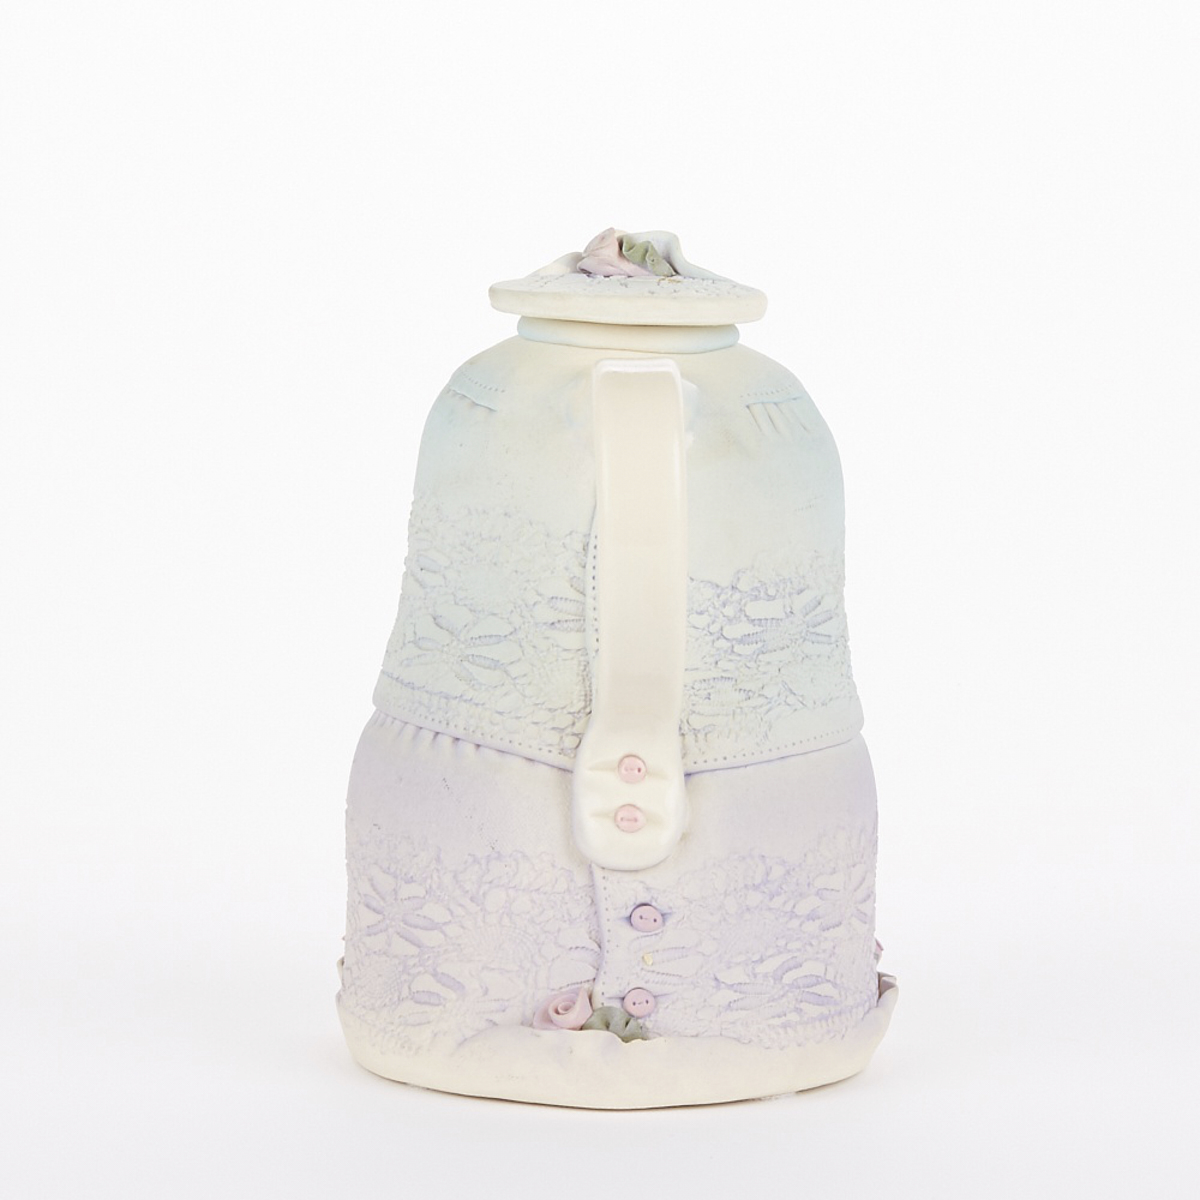 Laura Peery Porcelain Teapot - Image 2 of 6